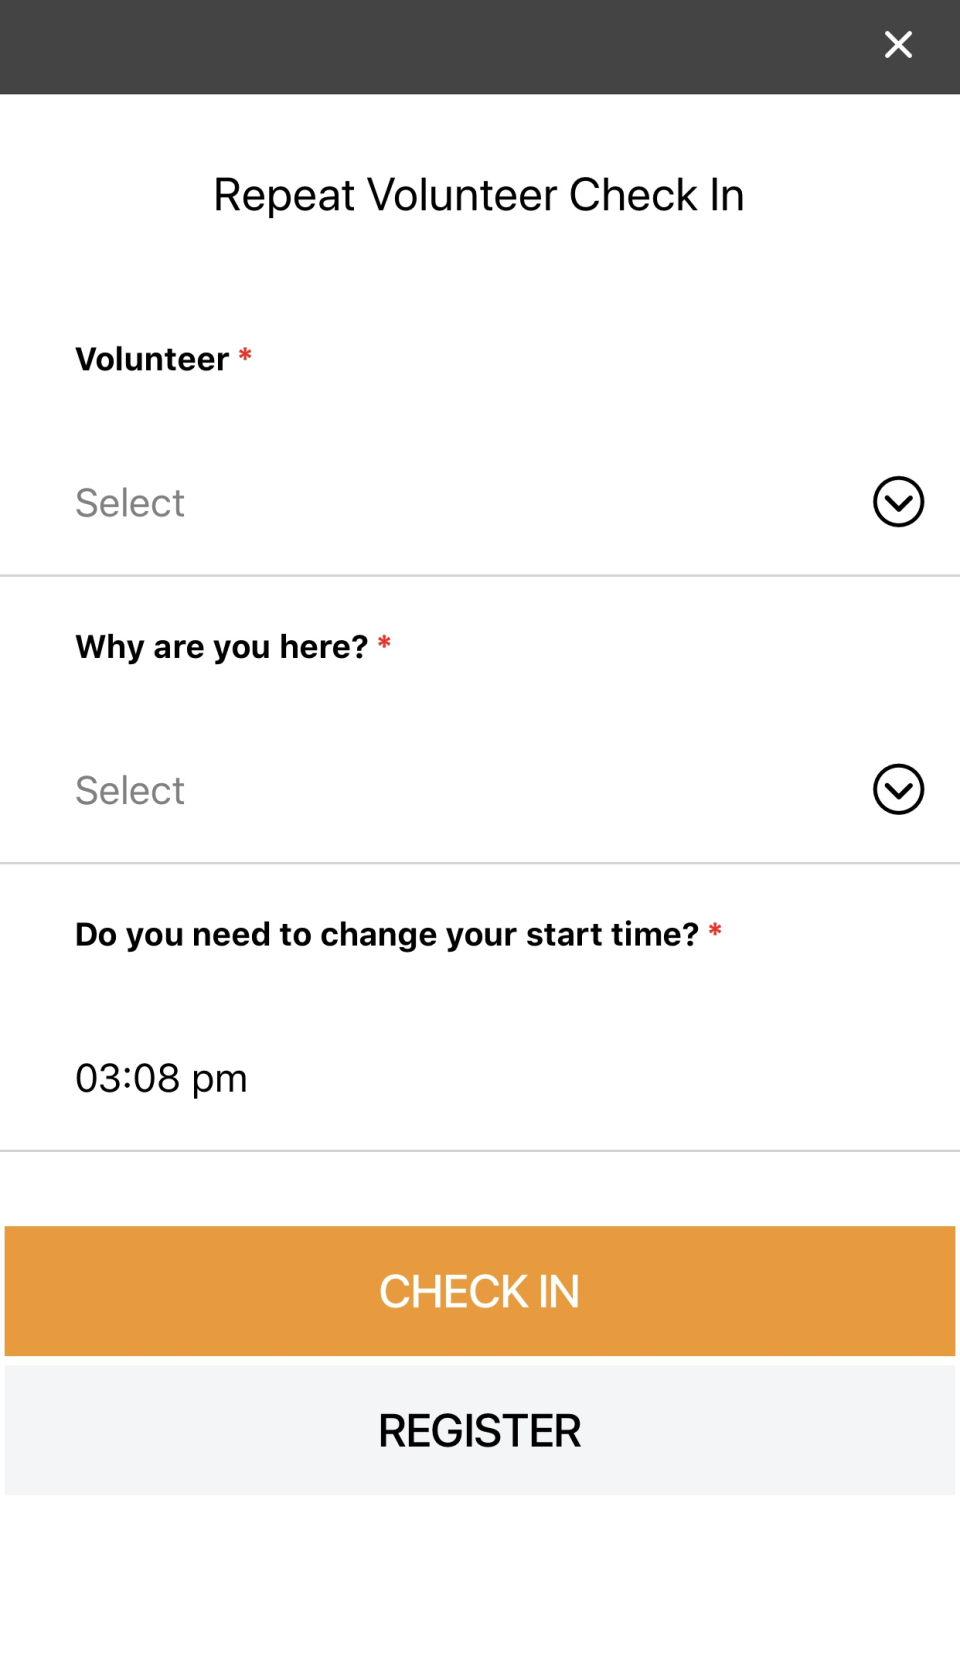 Volunteer Check In Kiosk Software - 3